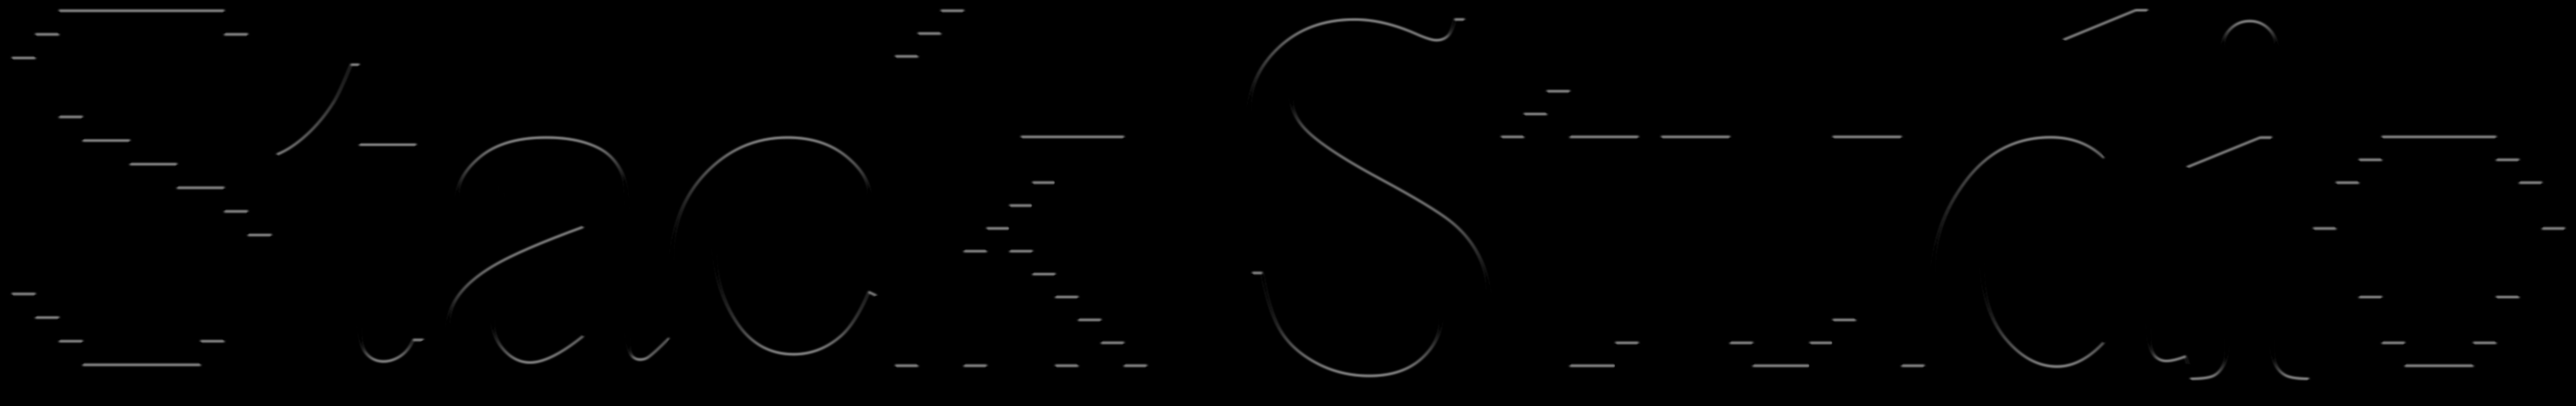 Stackstudio Logo black large